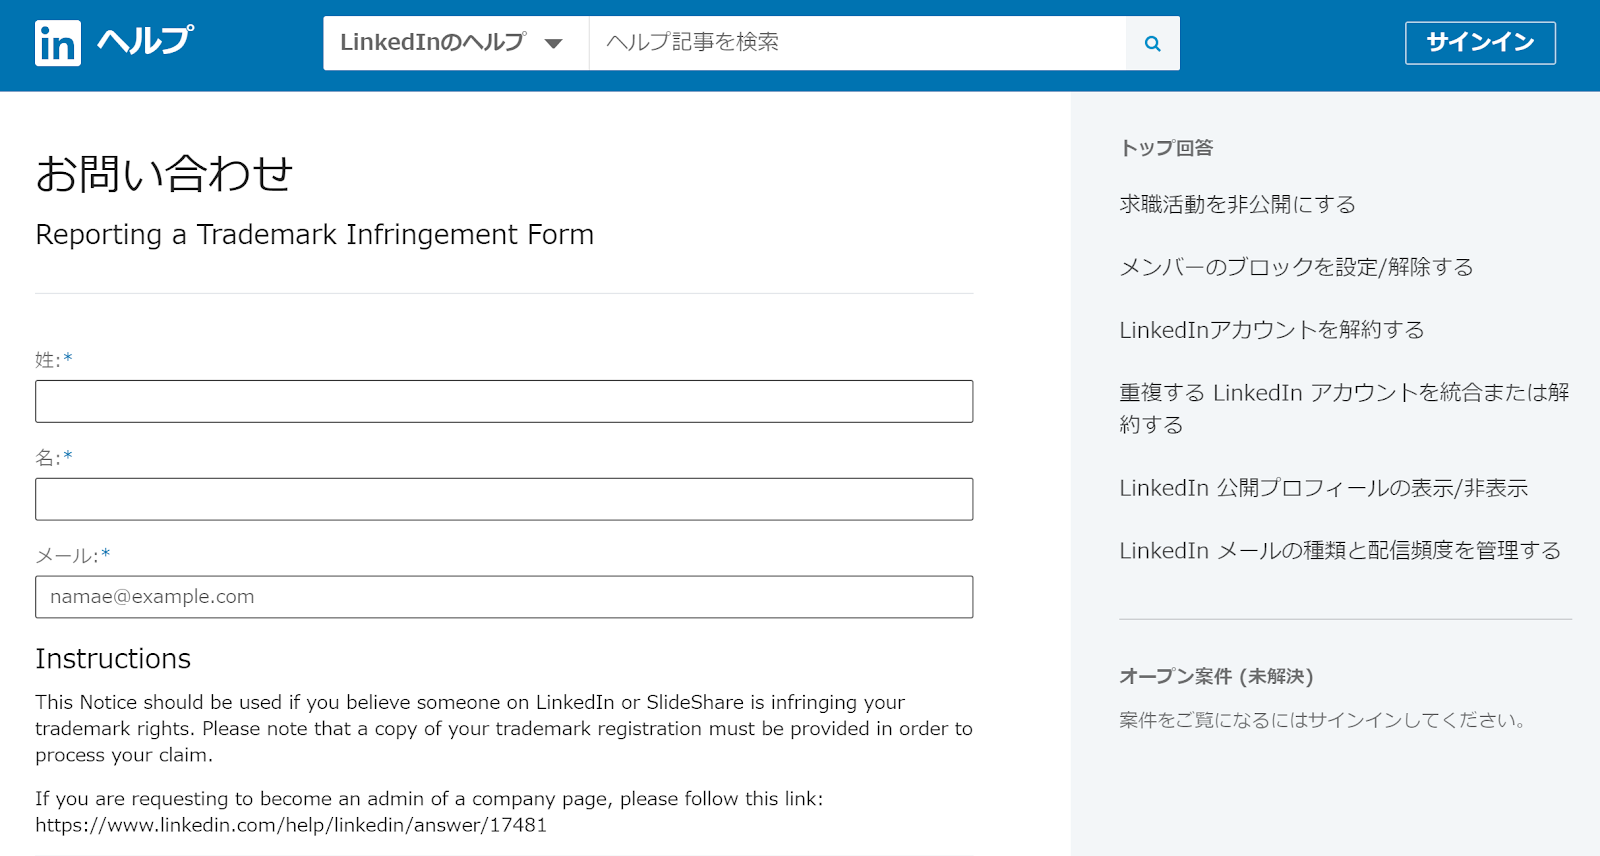 Reporting a Trademark Infringement Form LinkedIn